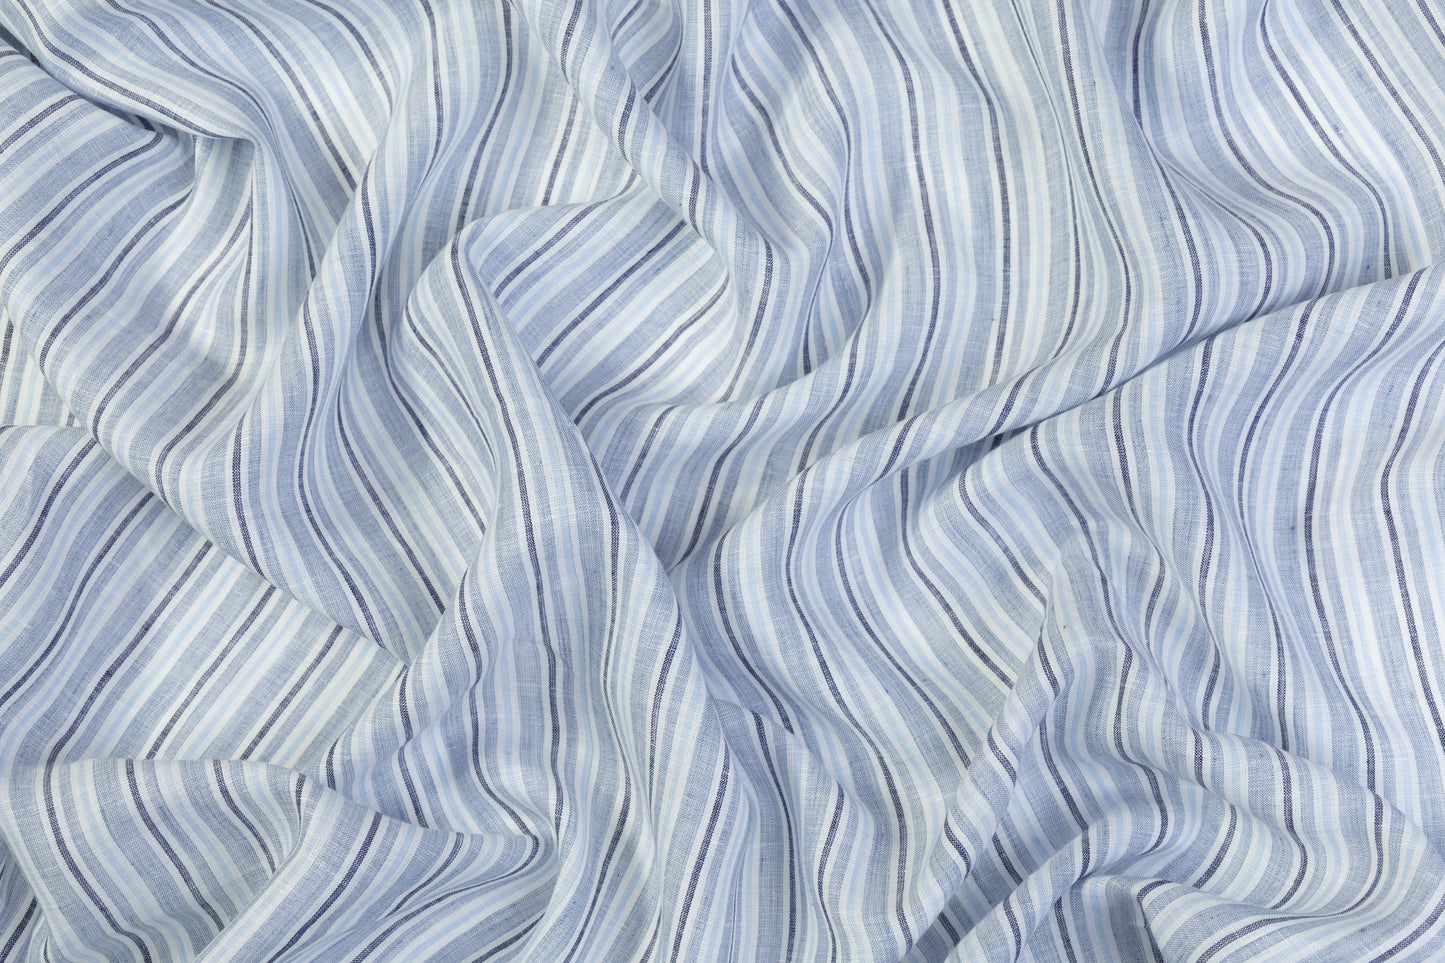 Striped Italian Linen - Blue / Gray / White